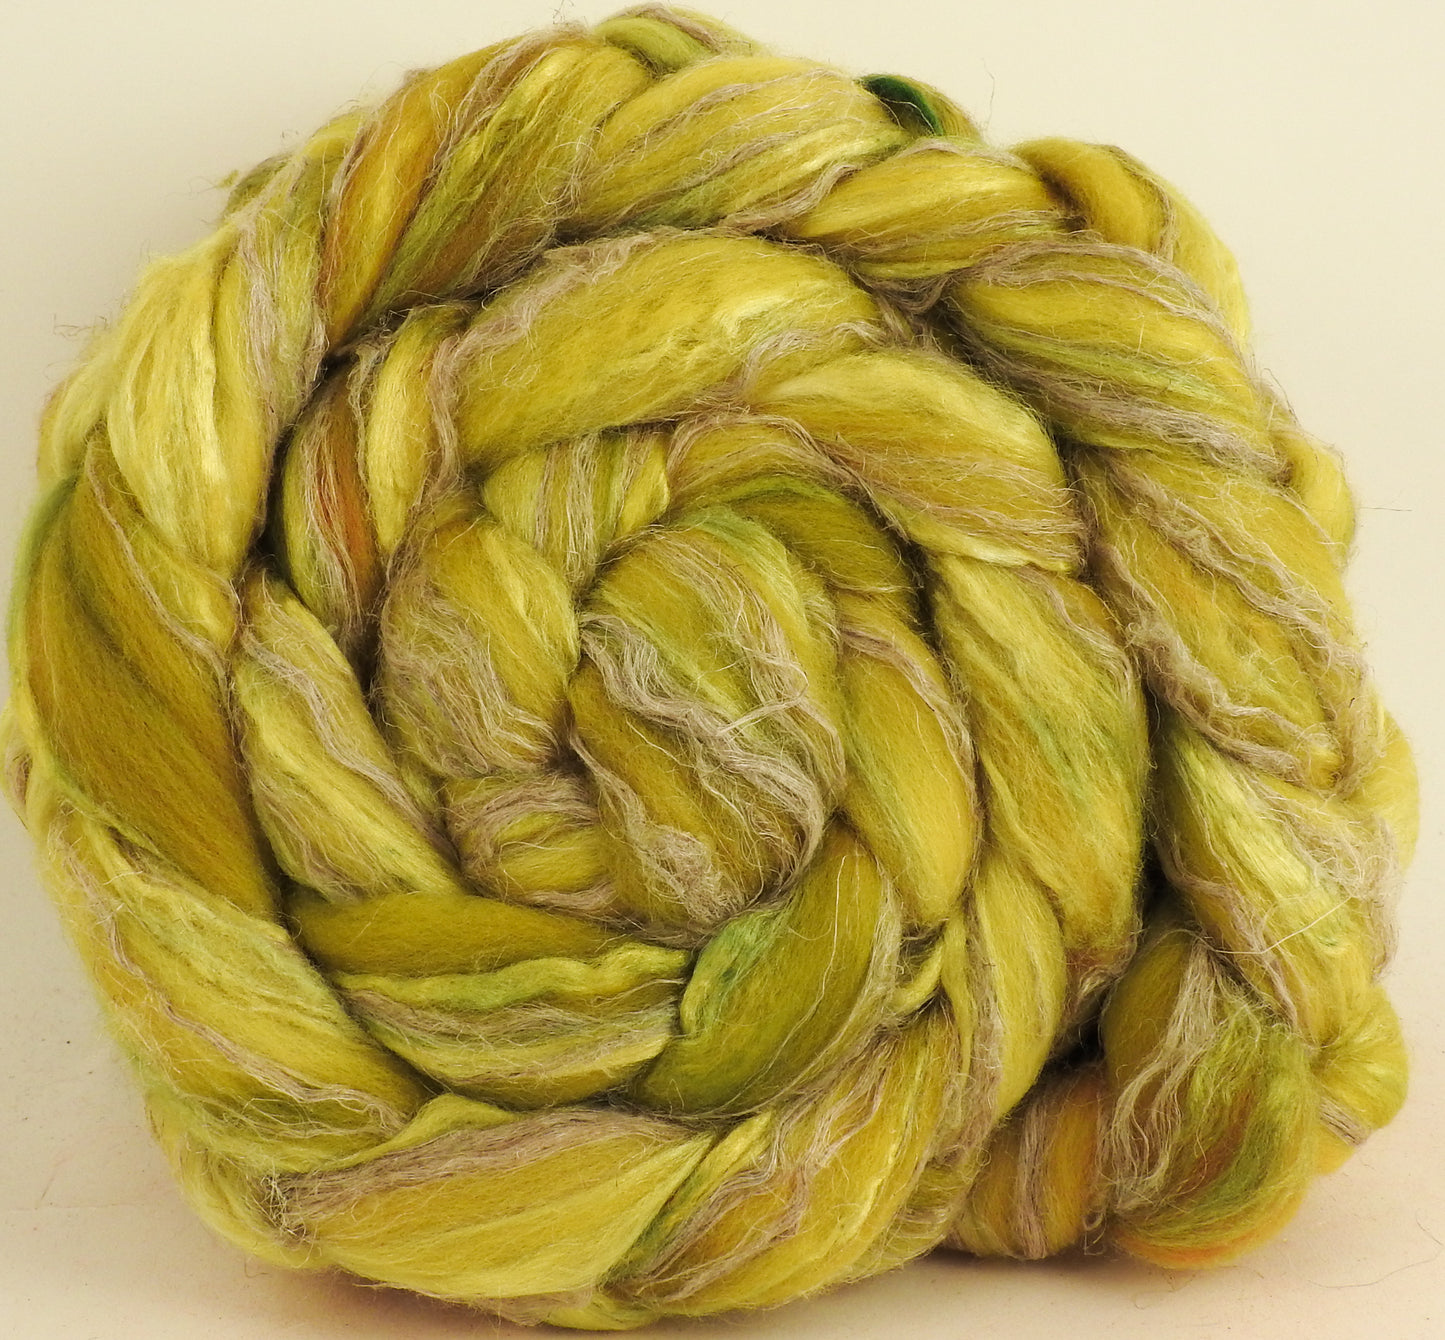 Grellow (5.8 oz) - Merino/ Tussah Silk/ Natural Flax (50/25/25)